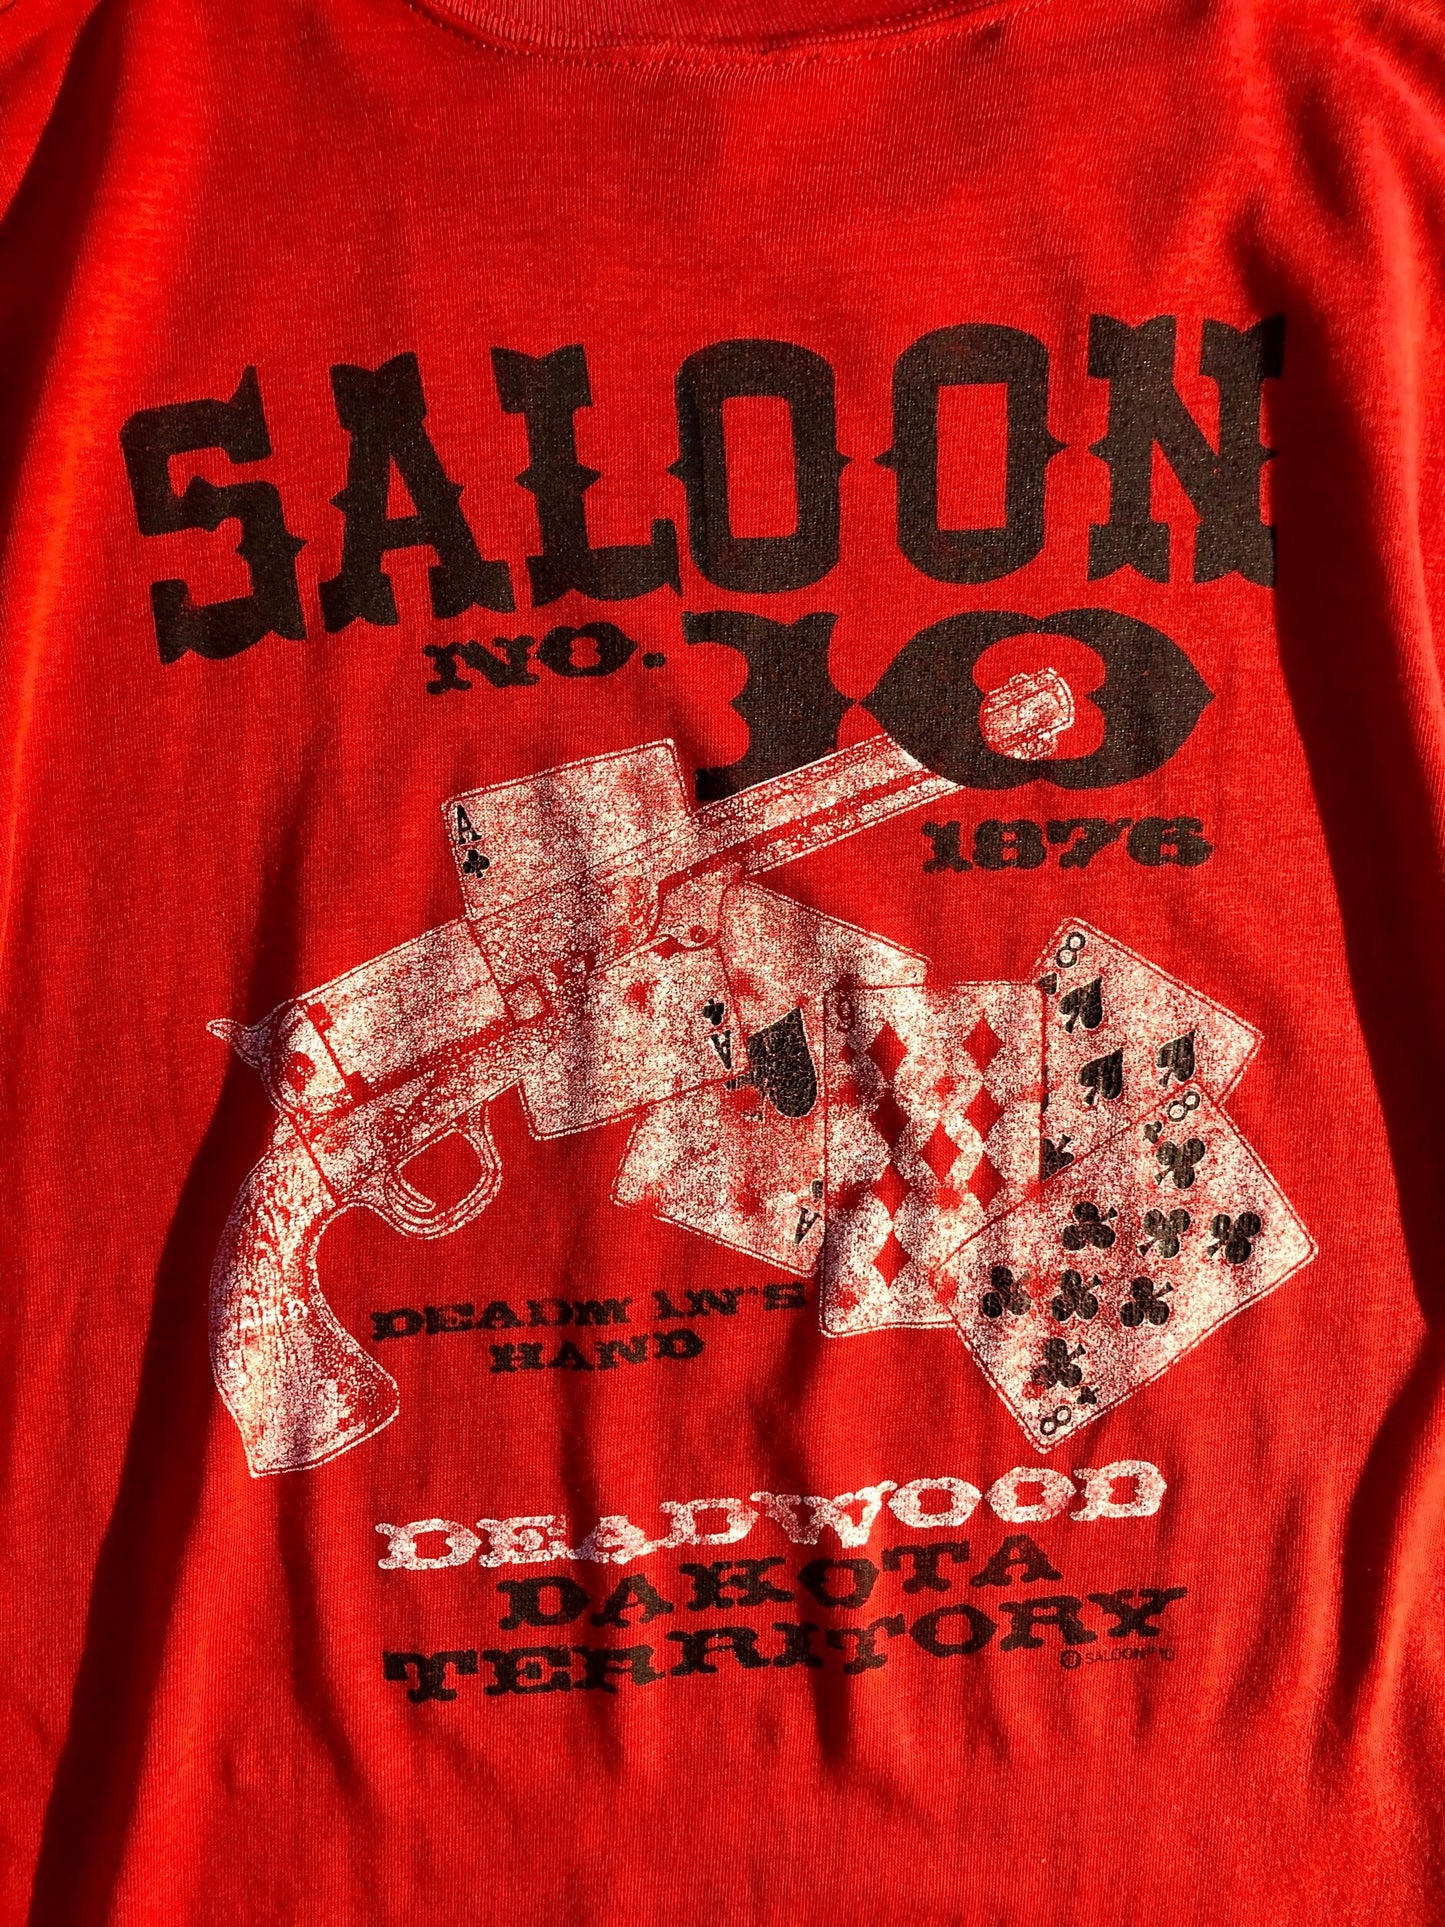 Vintage Saloon T-Shirt ♥️